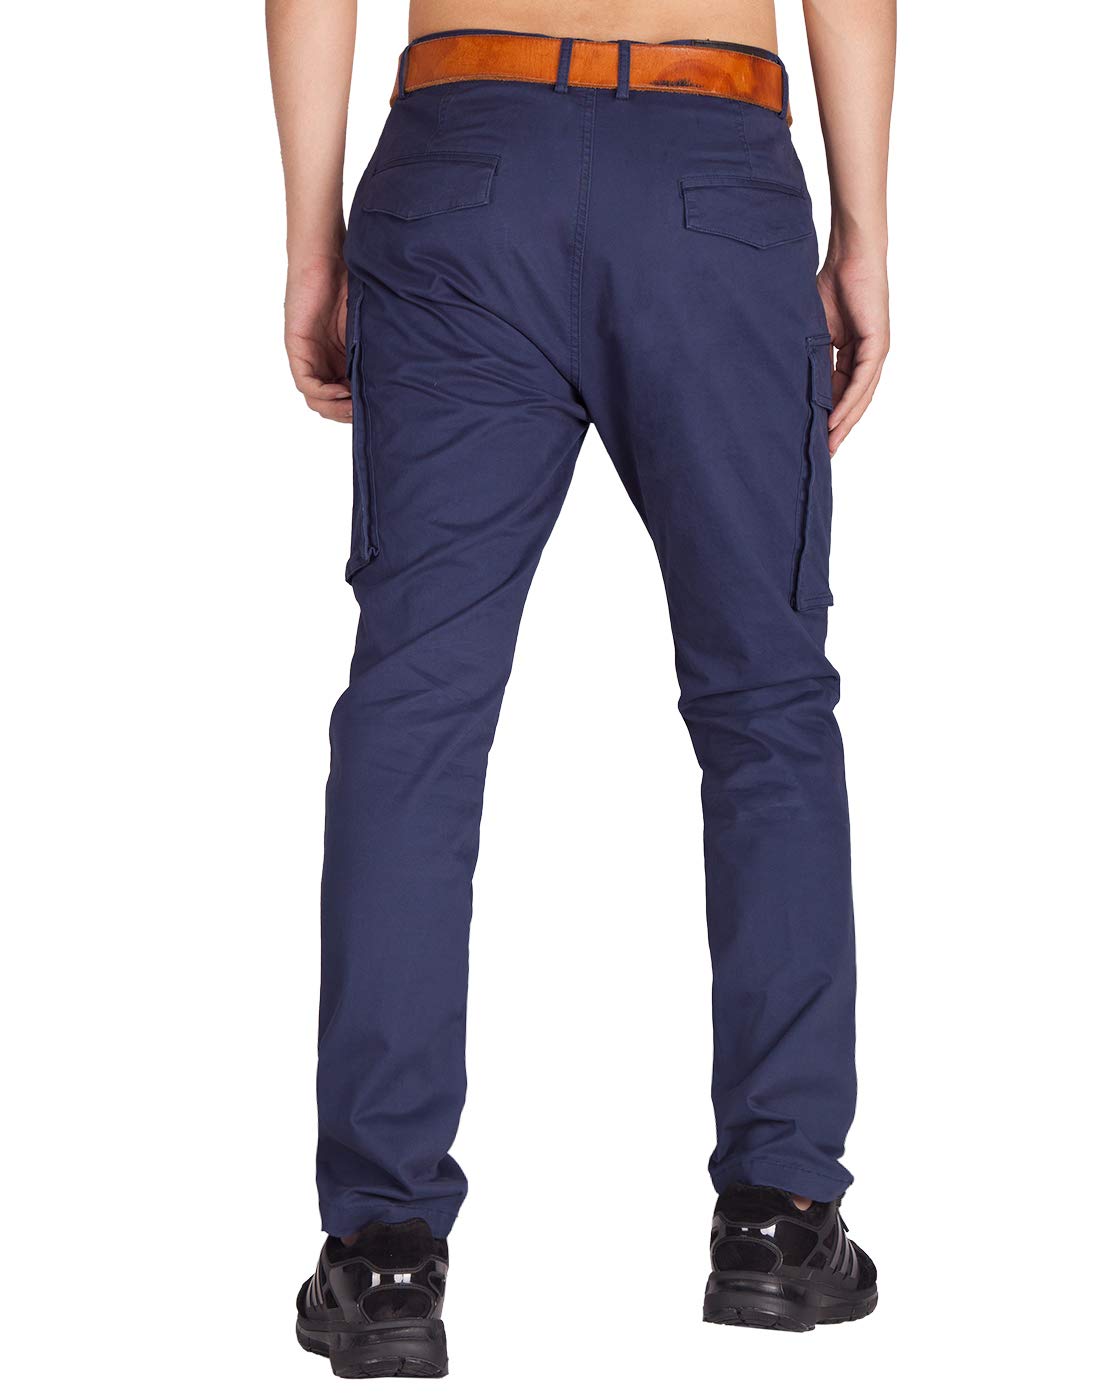 Gubotare Men Sweatpants Adult Open Bottom Sweatpants with Pockets, Style, Navy 5XL - Walmart.com